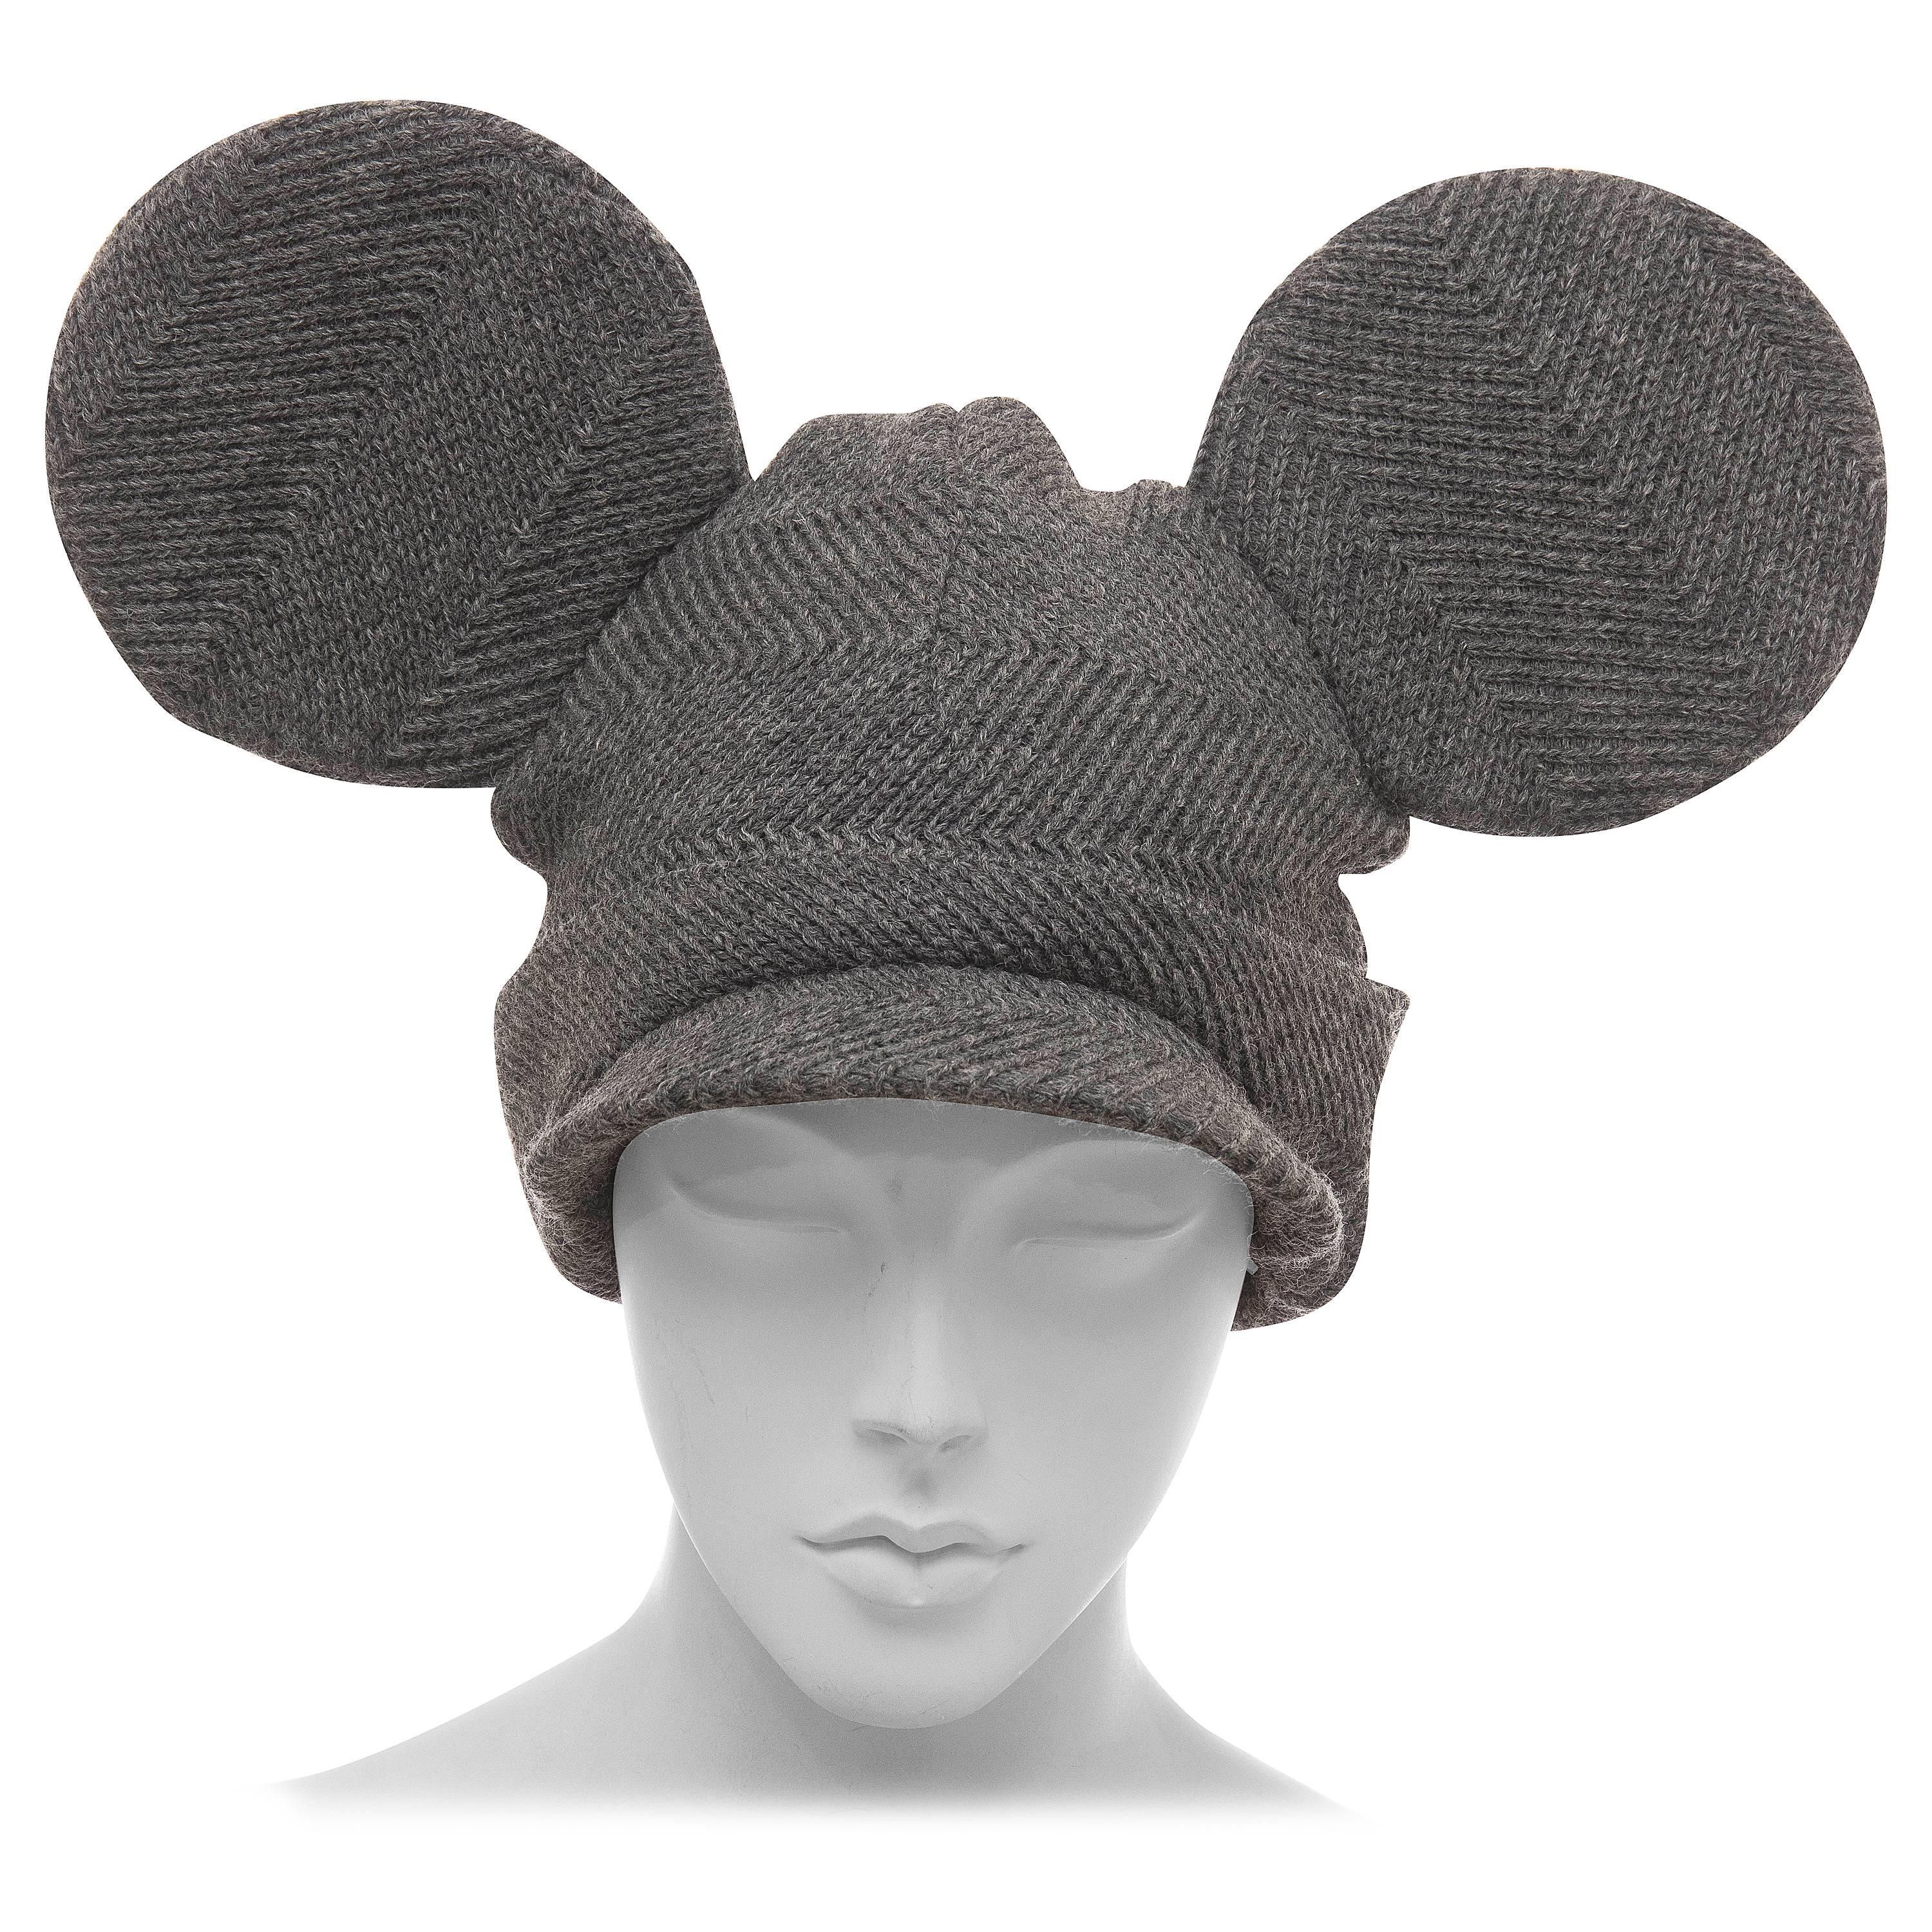 Comme des Garcons Stephen Jones Grey Wool Herringbone Mouse Ears Hat, Fall 2013